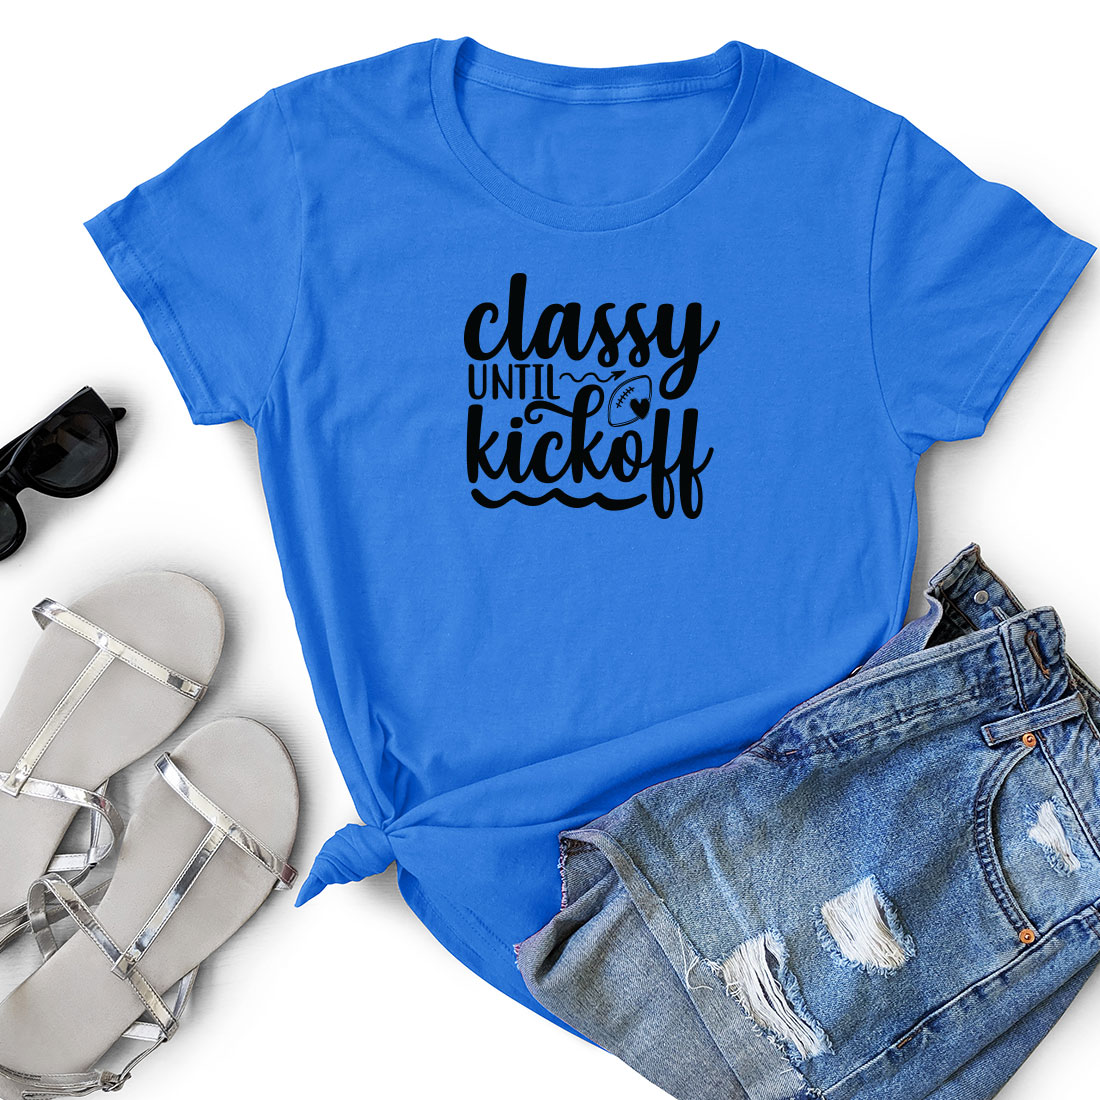 T - shirt that says classy until kickin '.